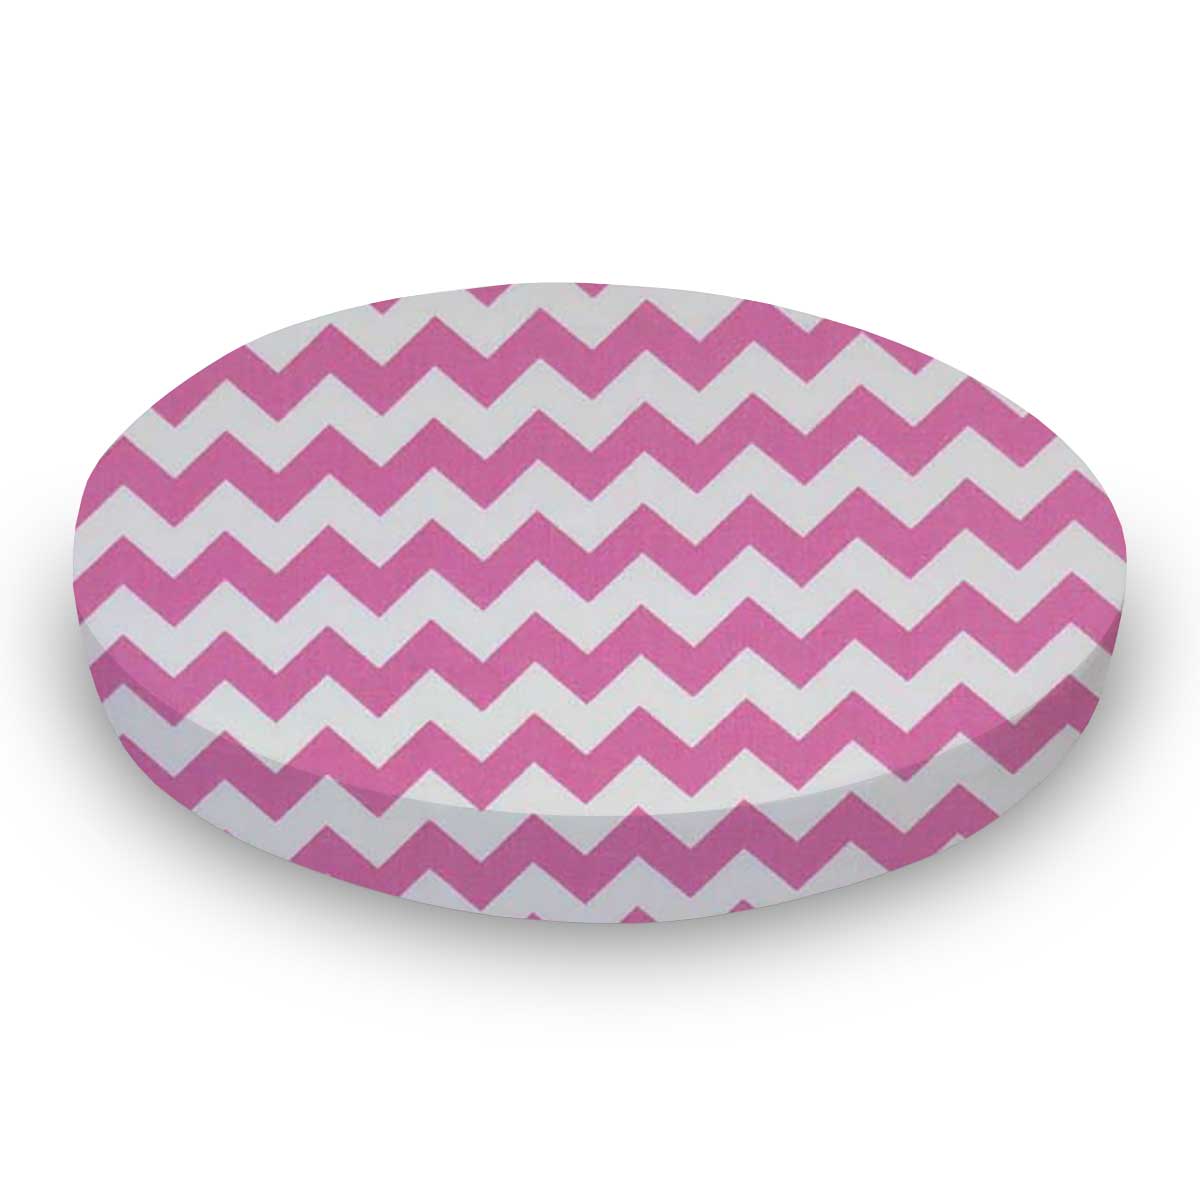 Oval Crib (Stokke Sleepi) - Bubble Gum Pink Chevron Zigzag - Fitted  Oval